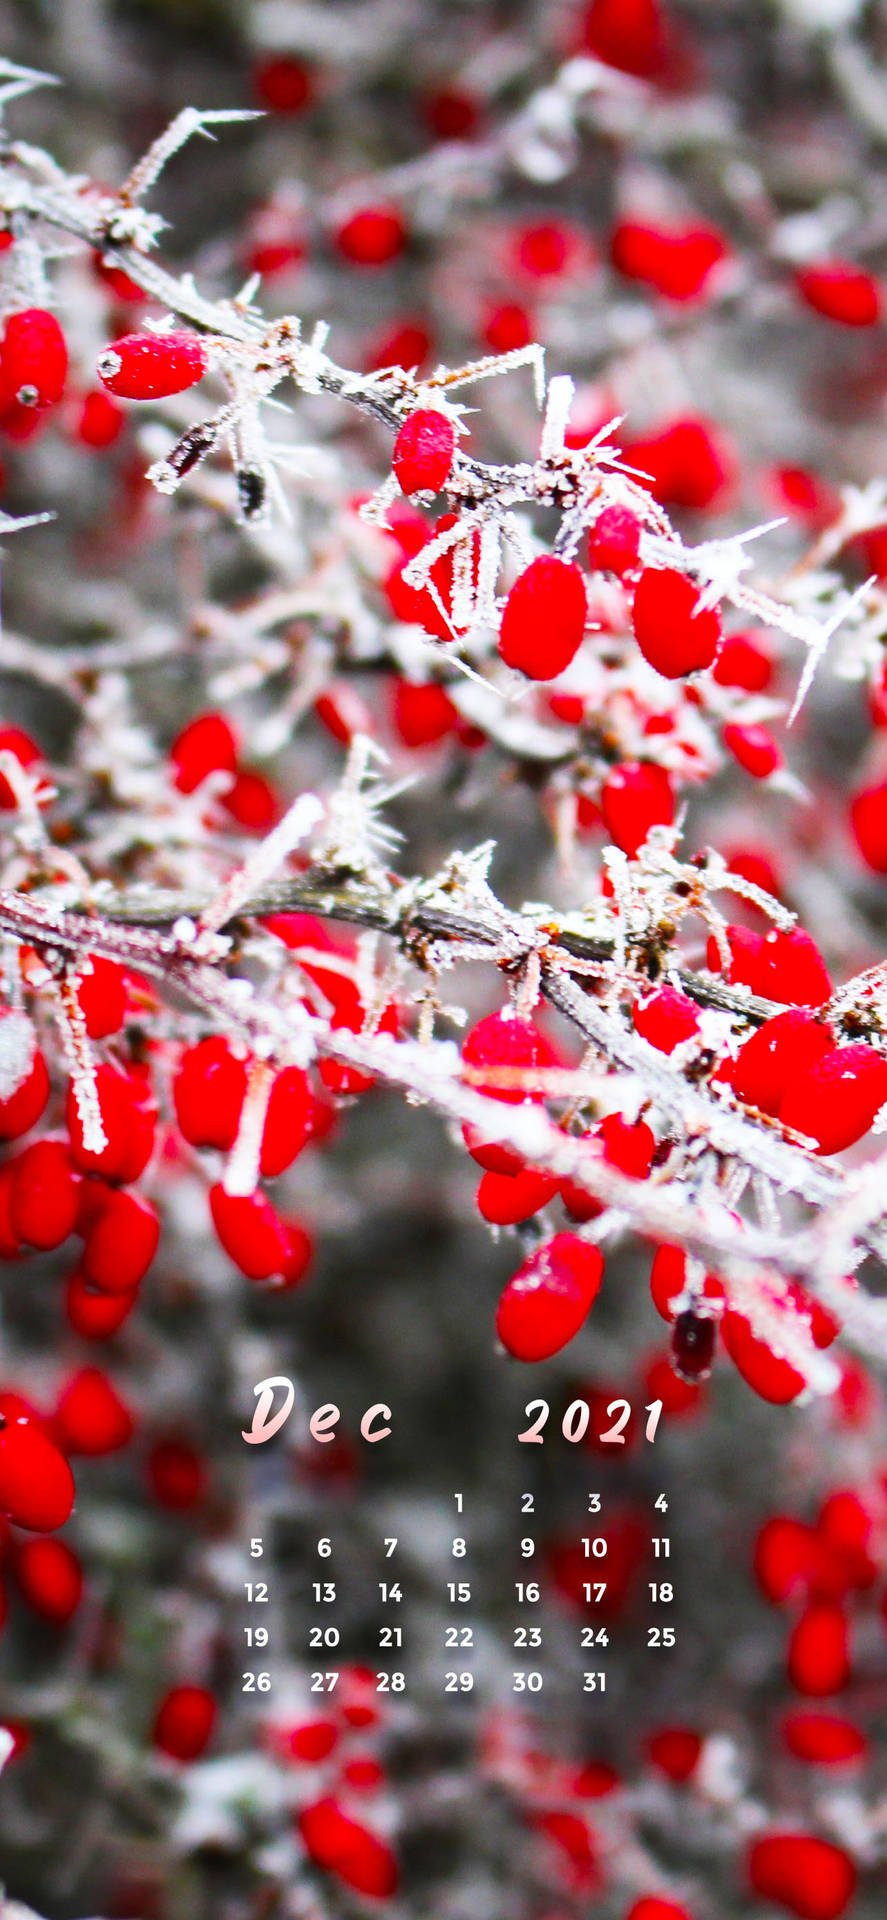 Red Cherries December 2021 Calendar Background